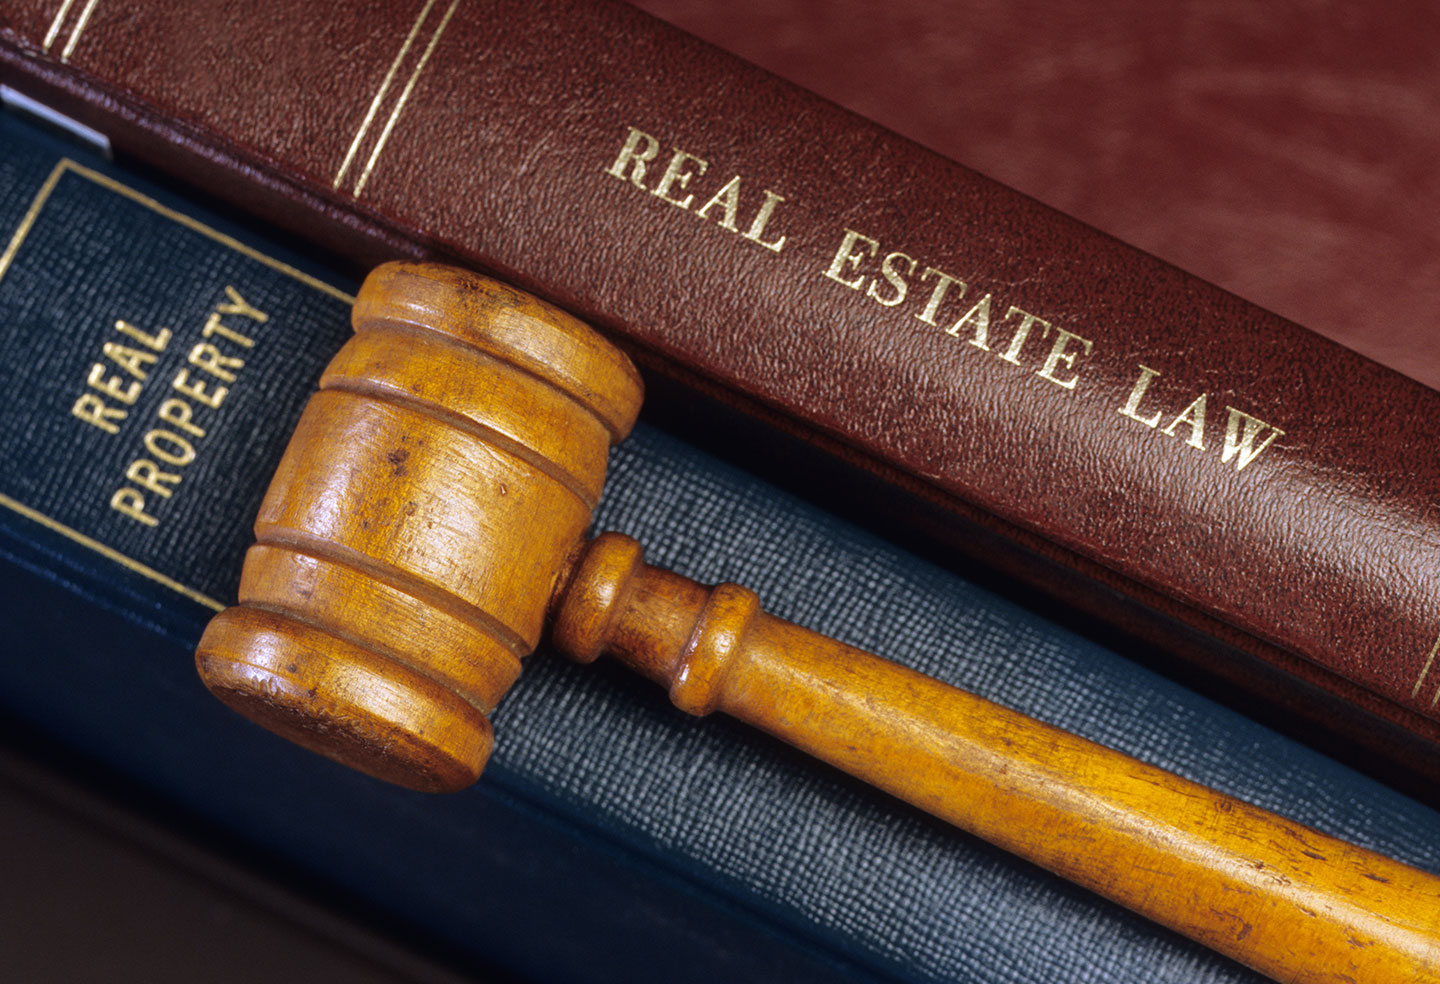 Background hero atmospheric image for Relating to Real Estate 2014 Real Property Legislation